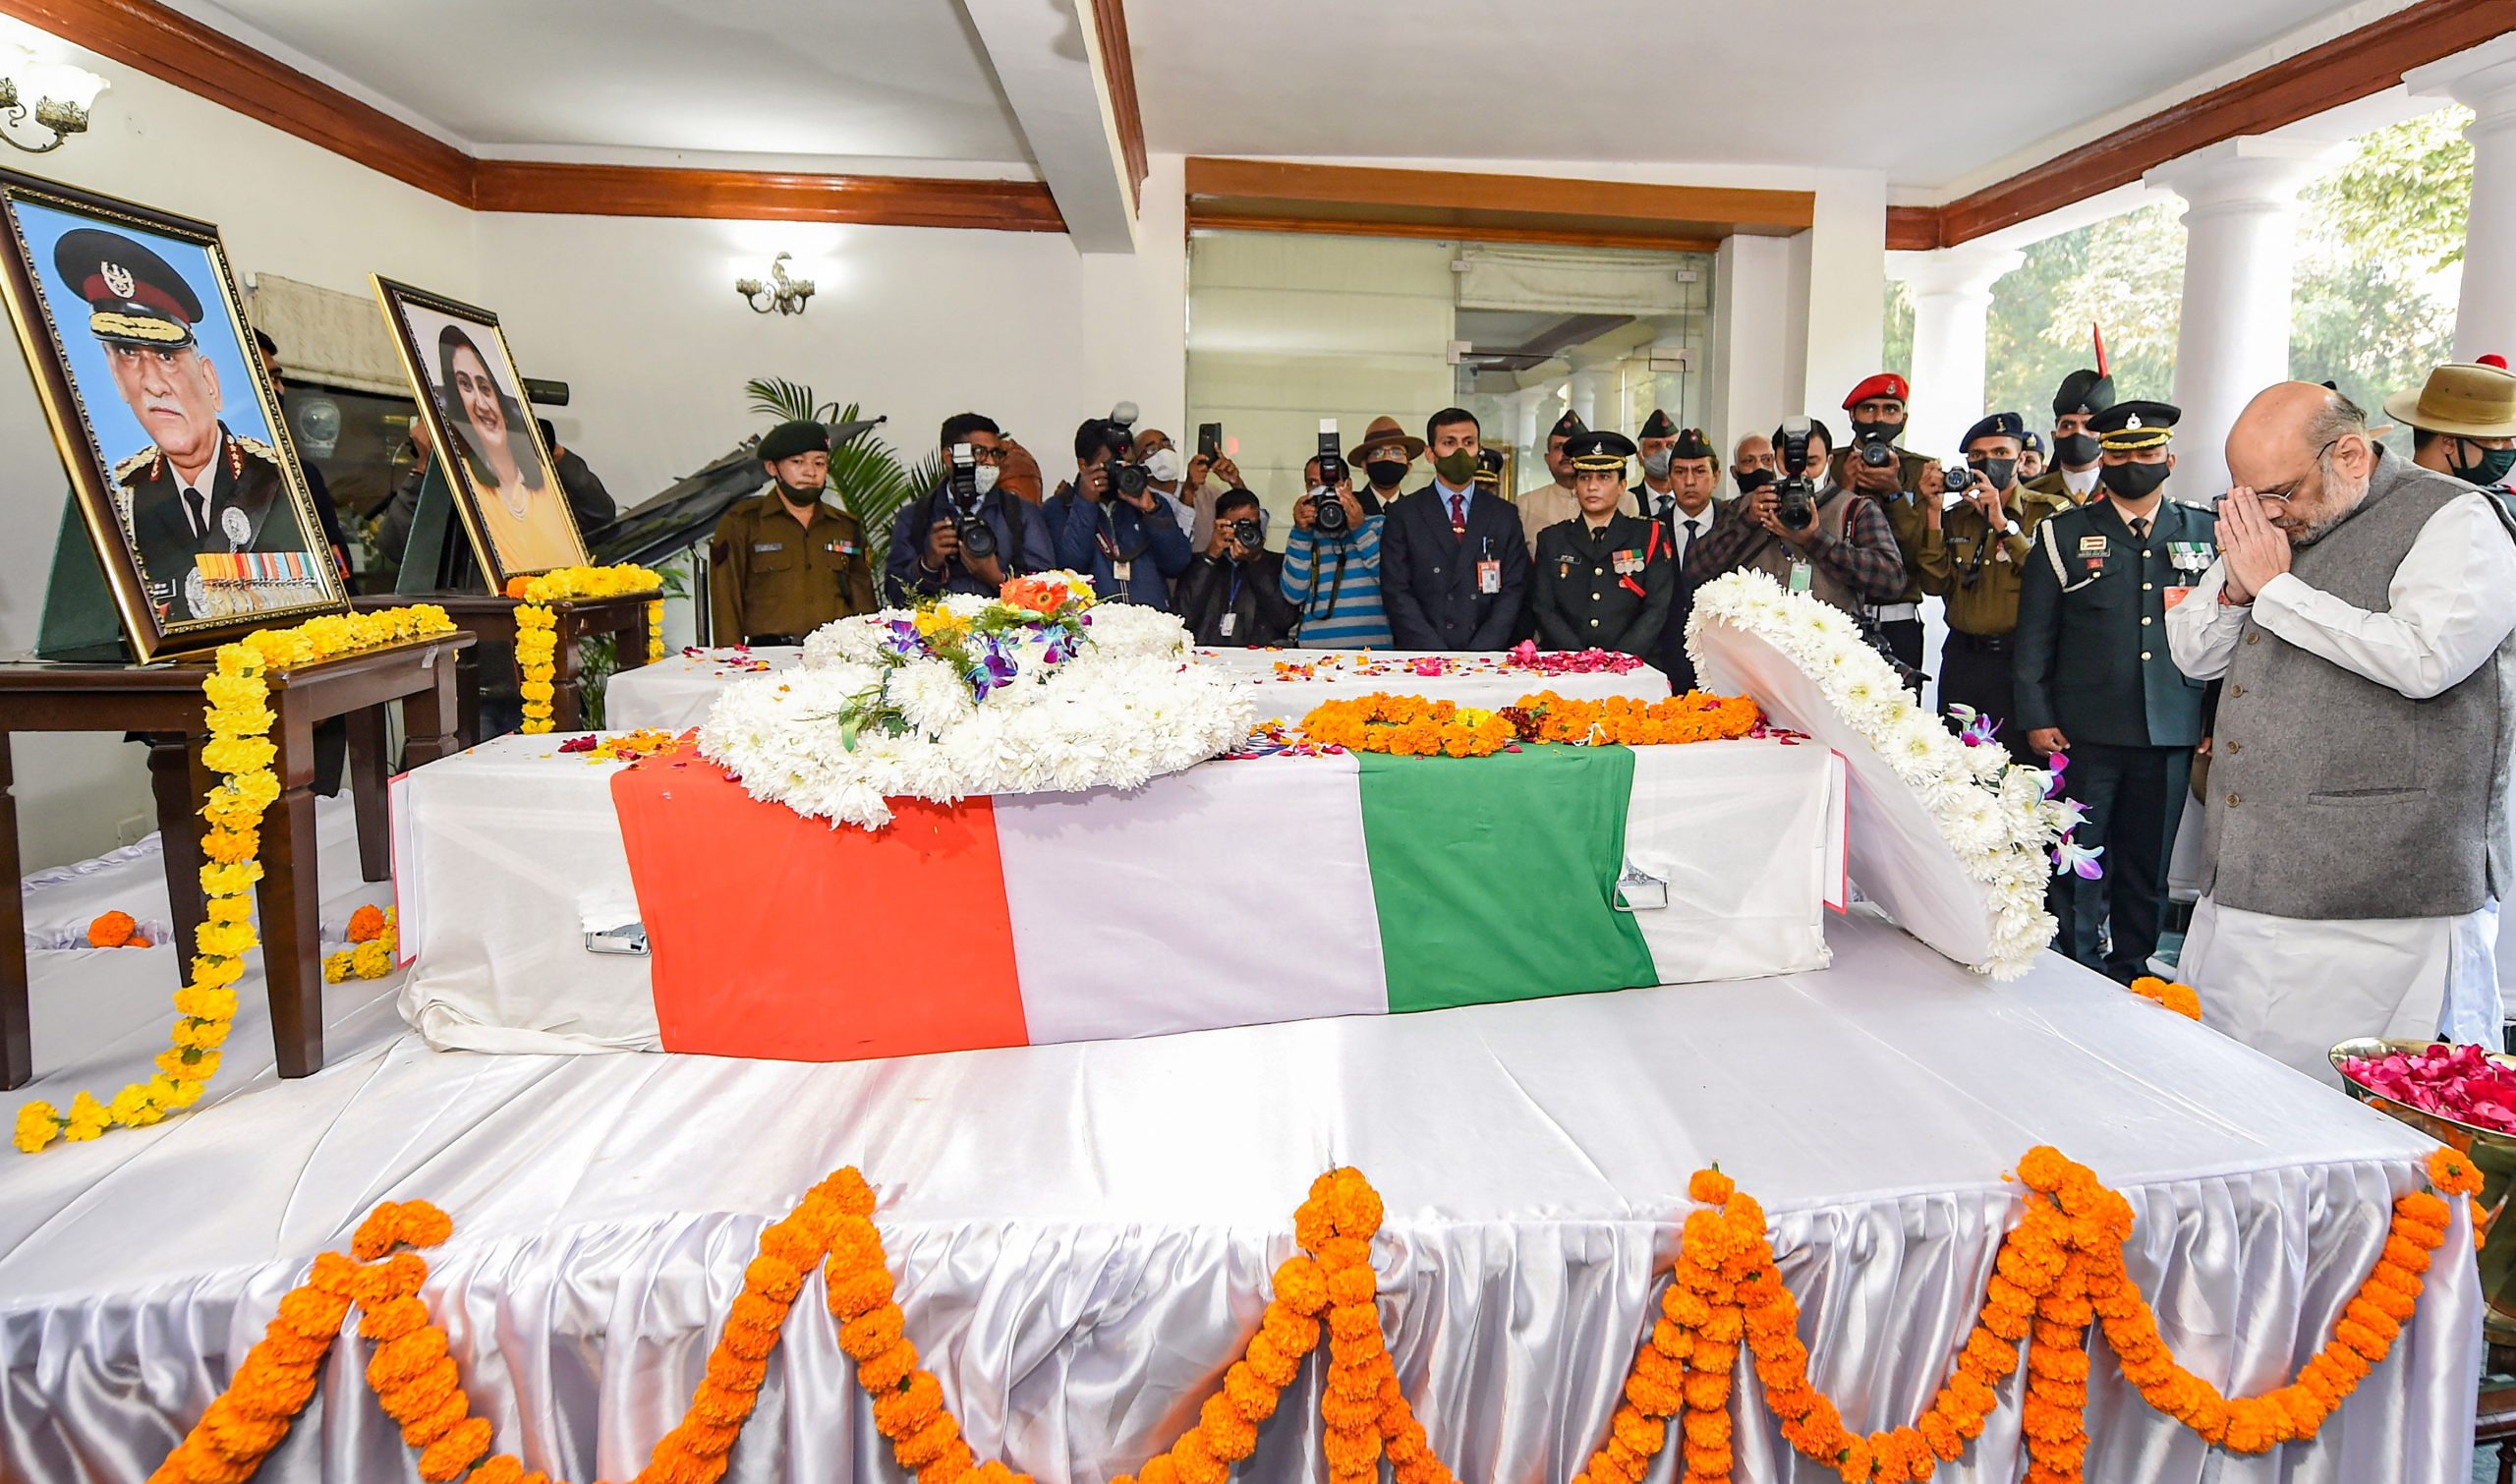 17-gun salute for CDS Bipin Rawat, body will be cremated at Brar crematorium